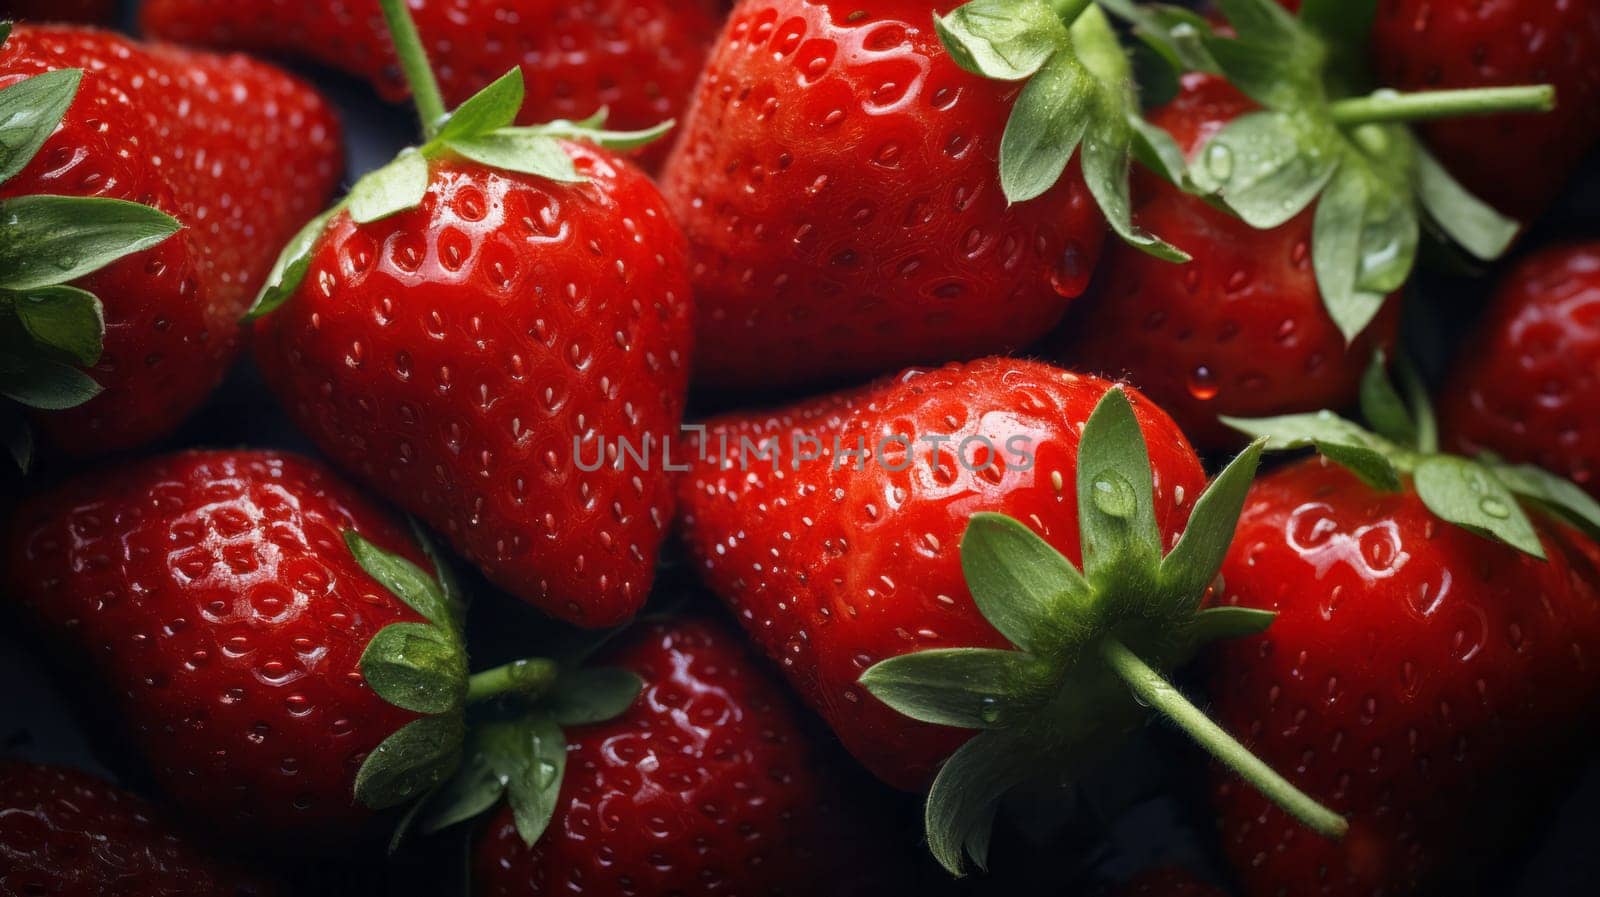 Strawberries background. Strawberry Food background by NataliPopova